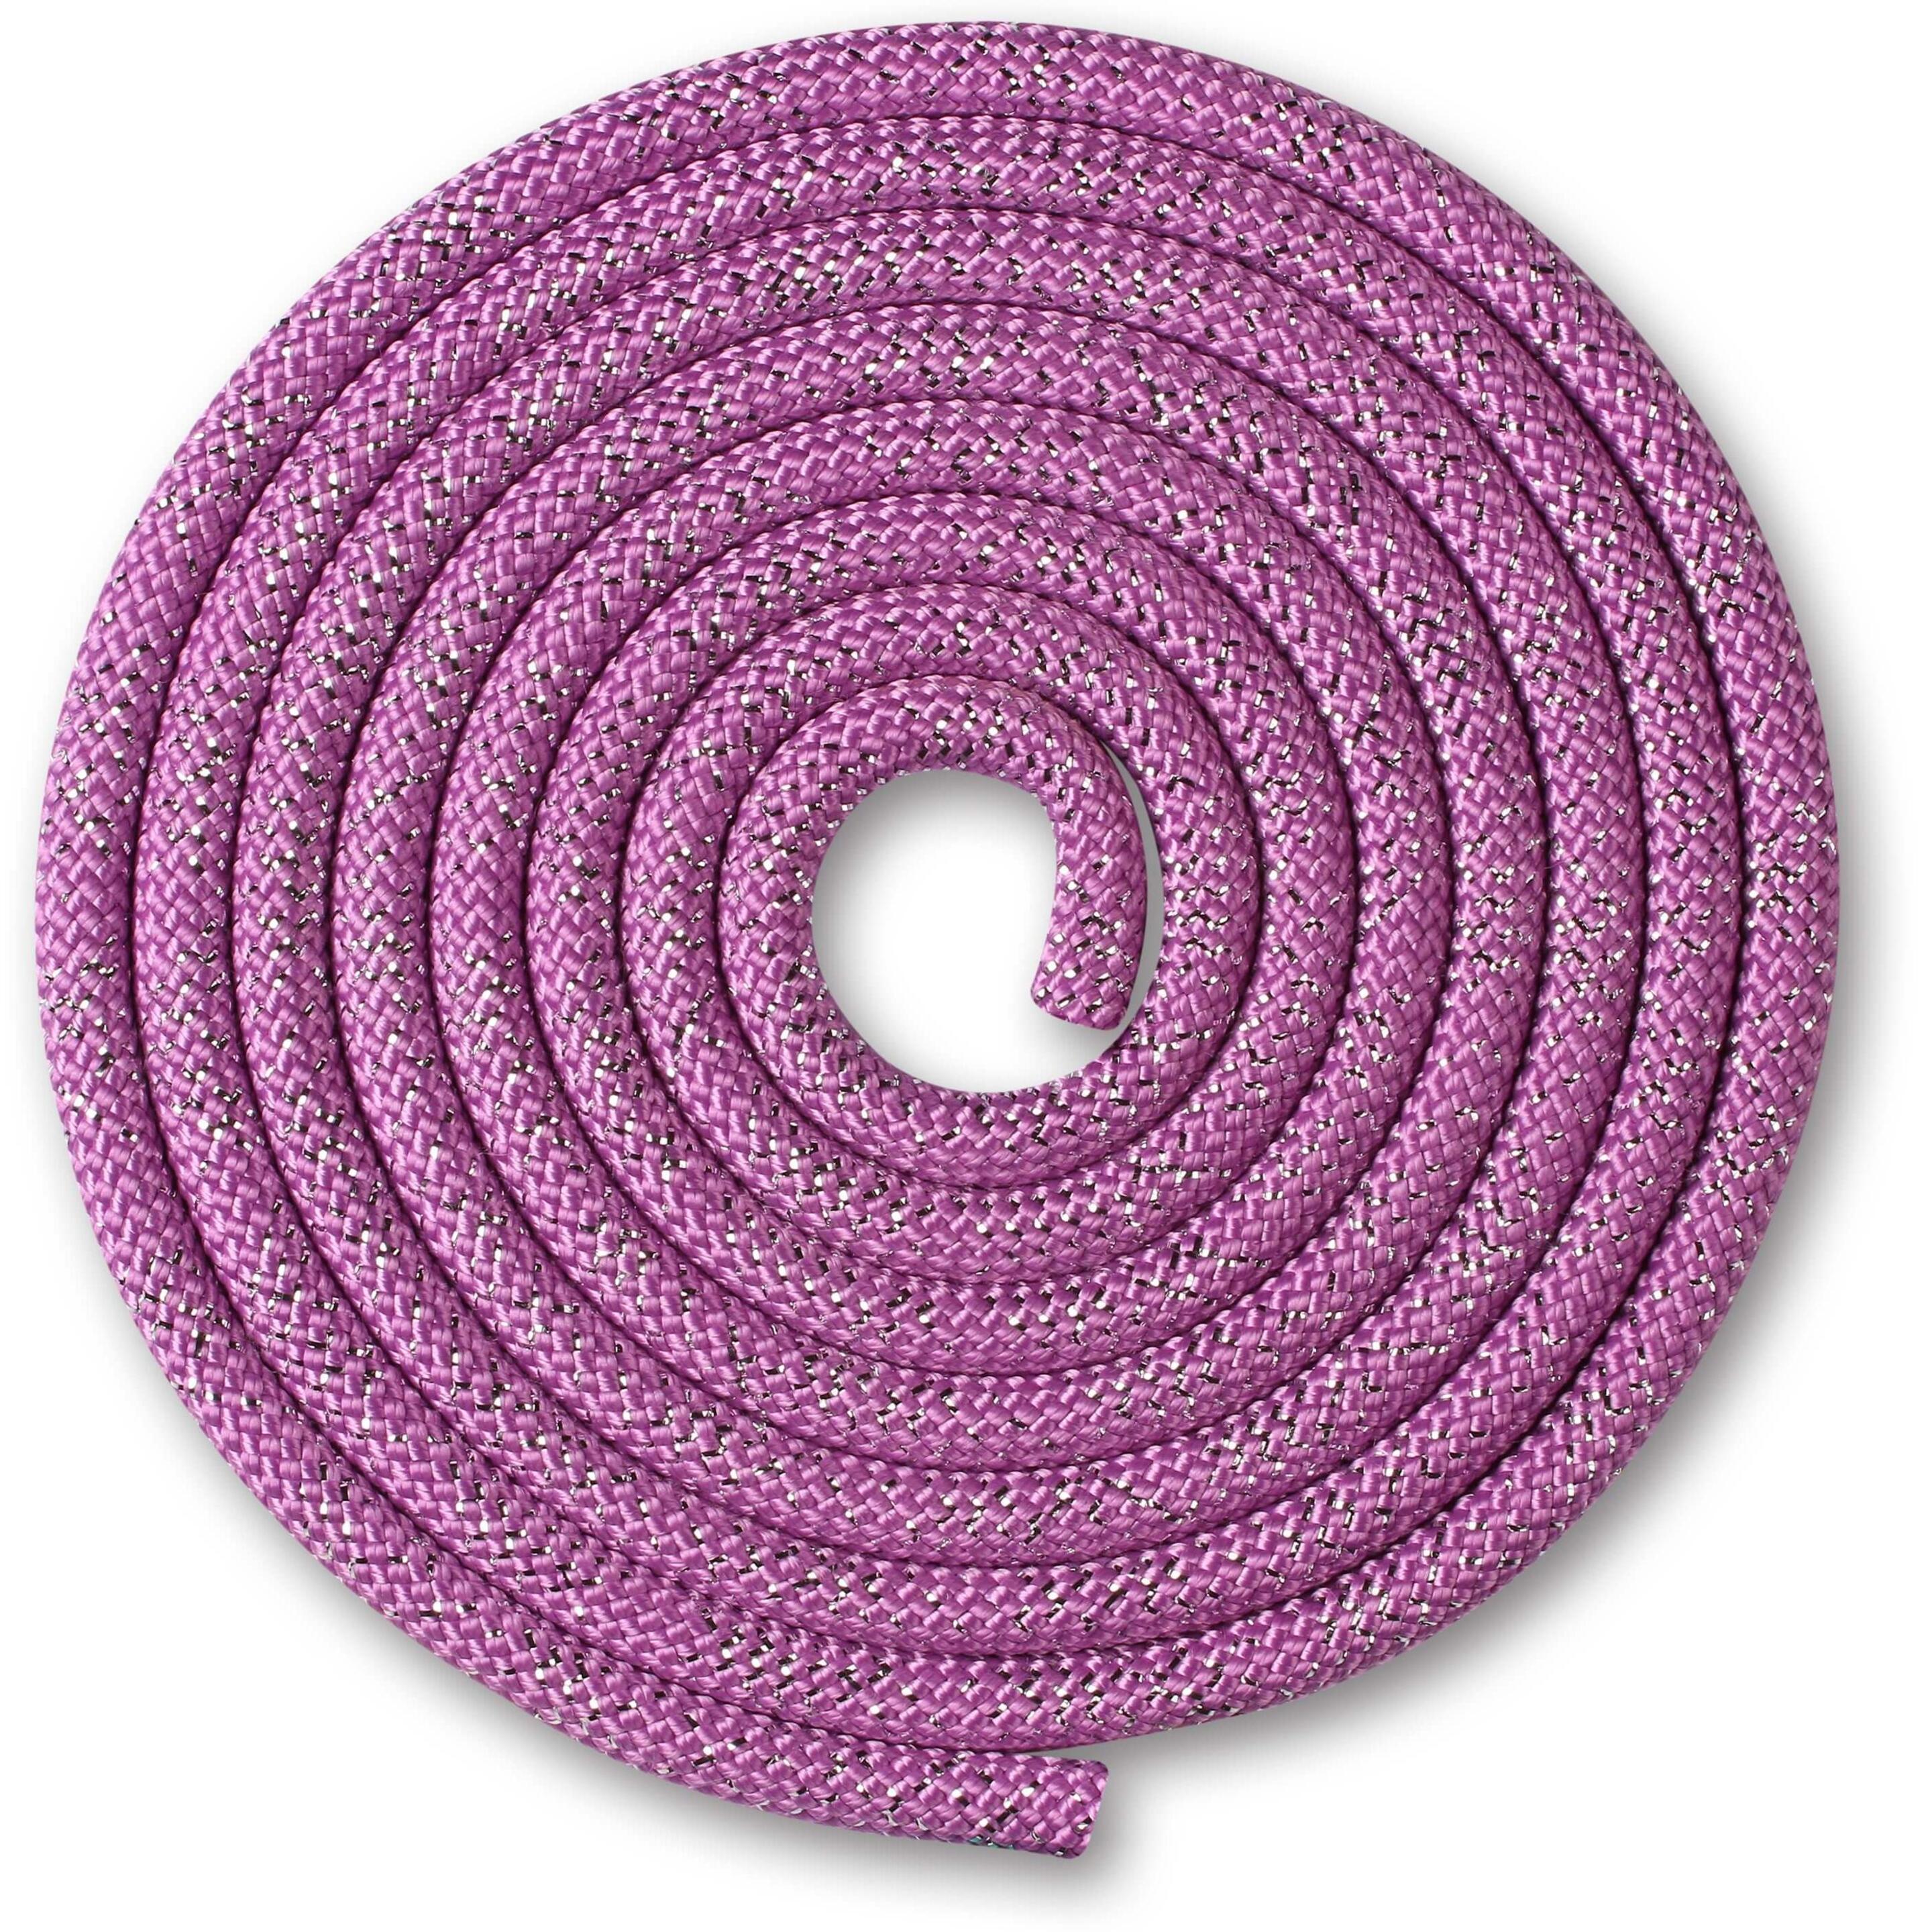 Cuerda Para Gimnasia Rítmica Ponderada 150 G Con Lurex Indigo 2,5 M - purpura - 